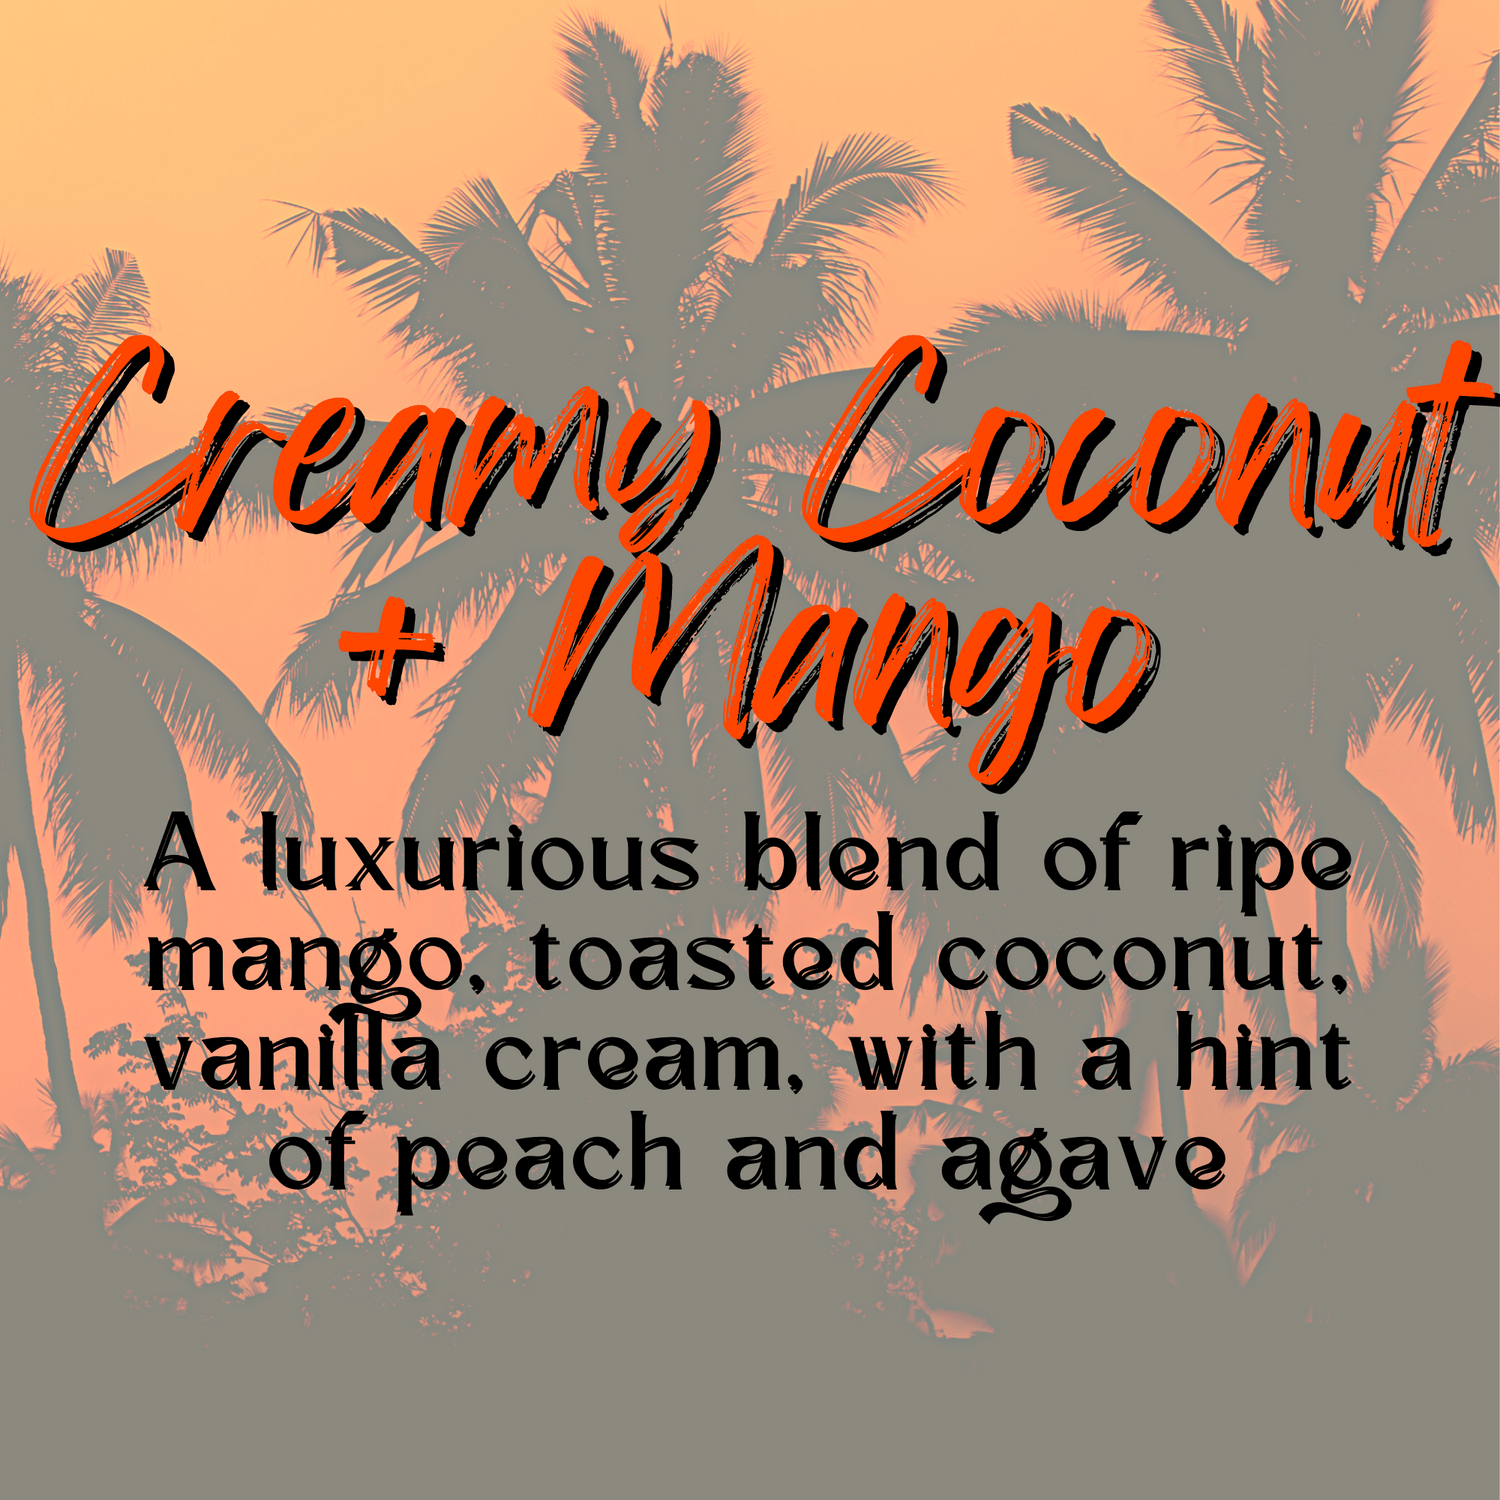 Creamy Coconut + Mango